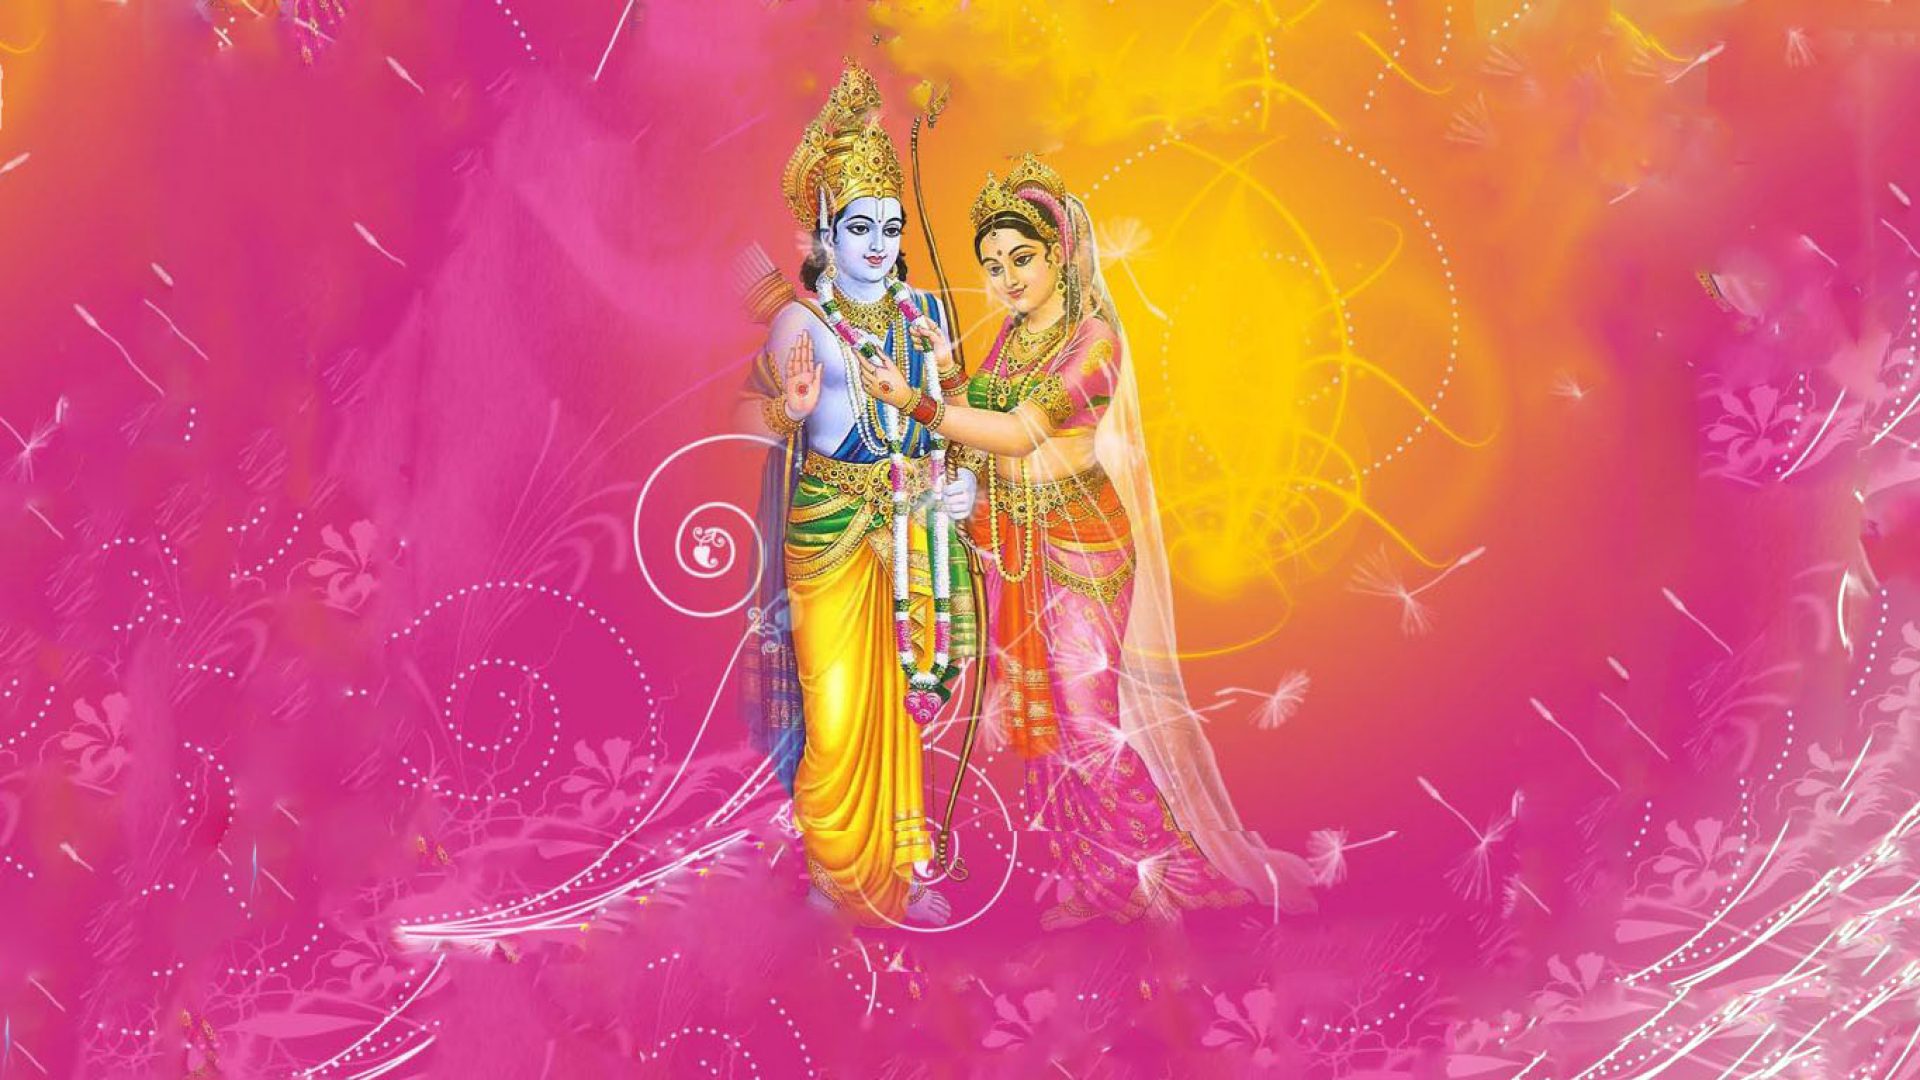 Shri Ram Sita Wallpaper Hd | Hindu Gods and Goddesses